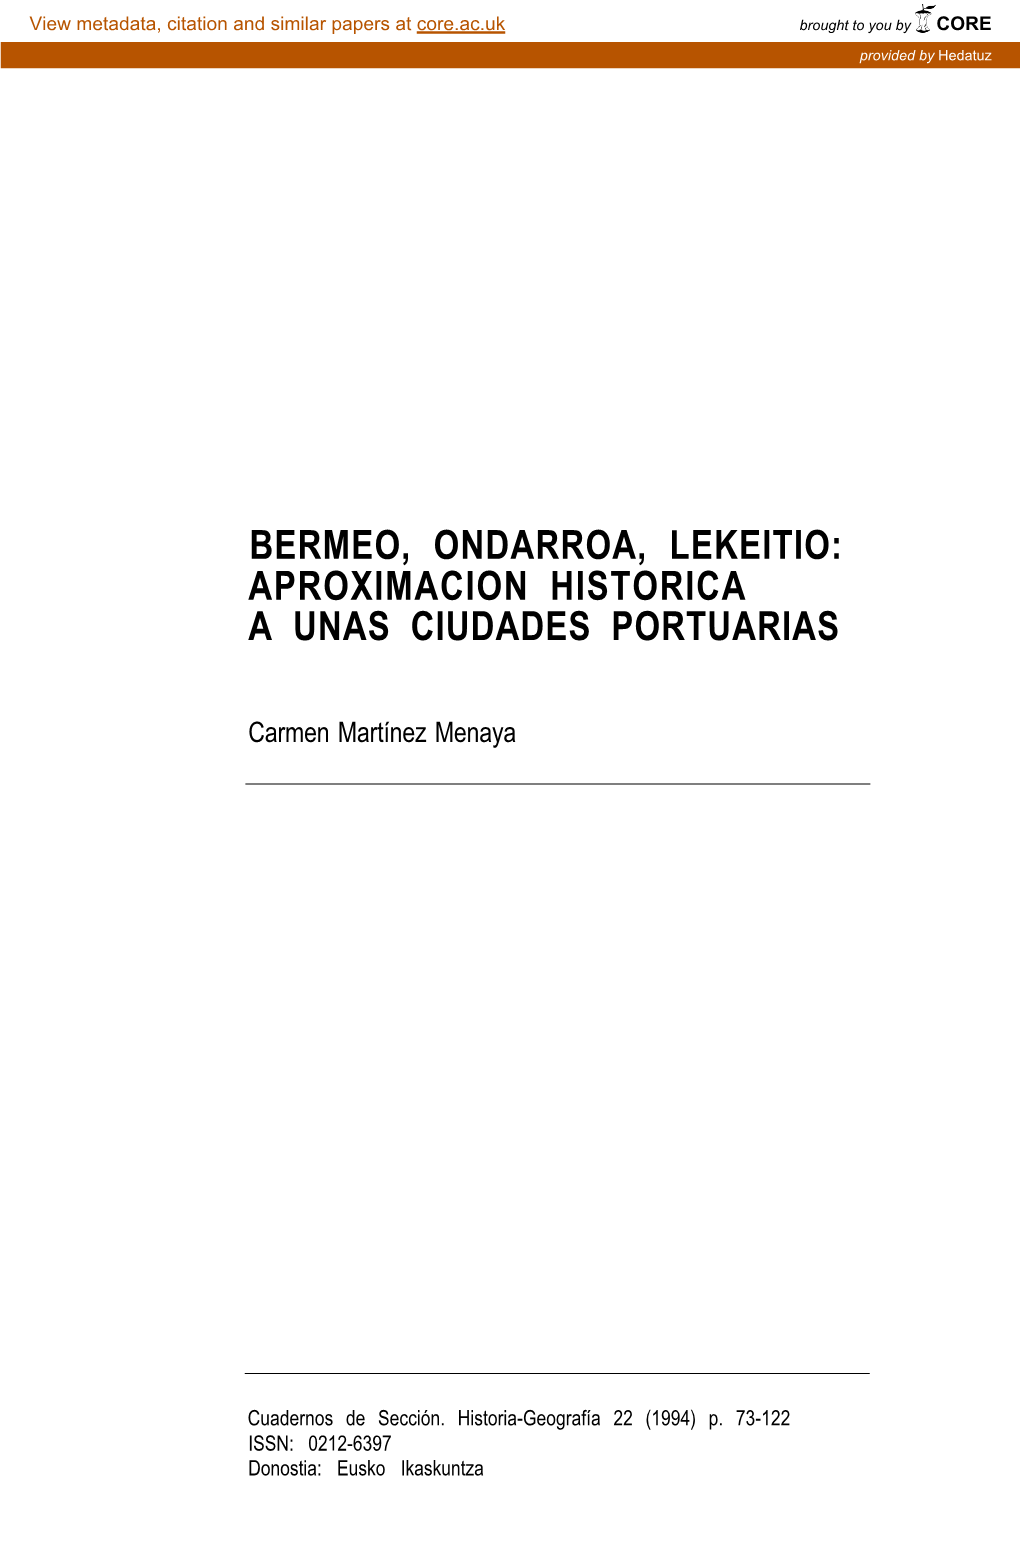 Bermeo, Ondarroa, Lekeitio: Aproximacion Historica a Unas Ciudades Portuarias